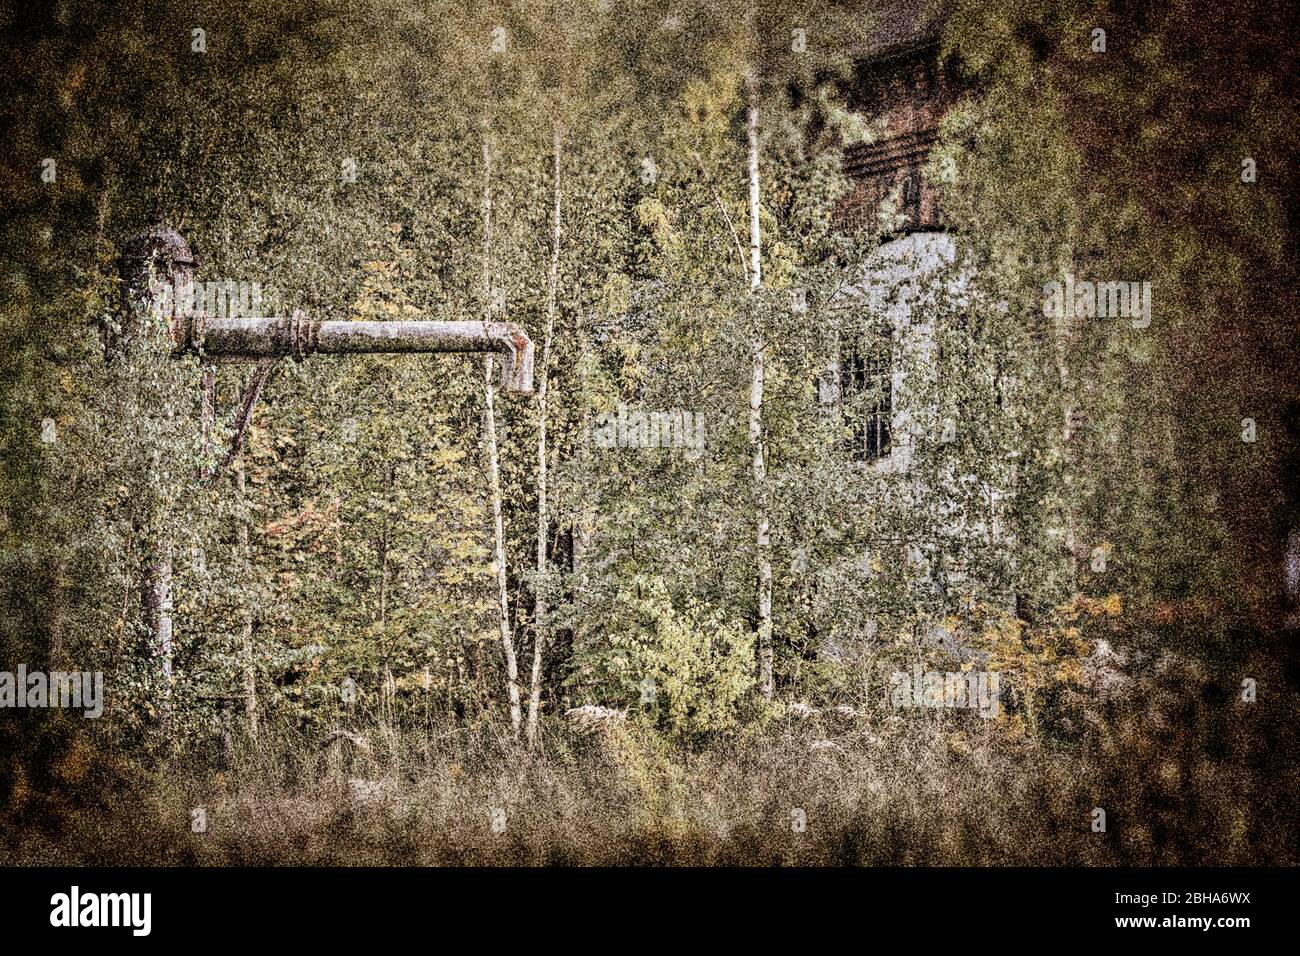 Water crane, Schuppentor, trees, grass, wild, digitally processed, RailArt Stock Photo